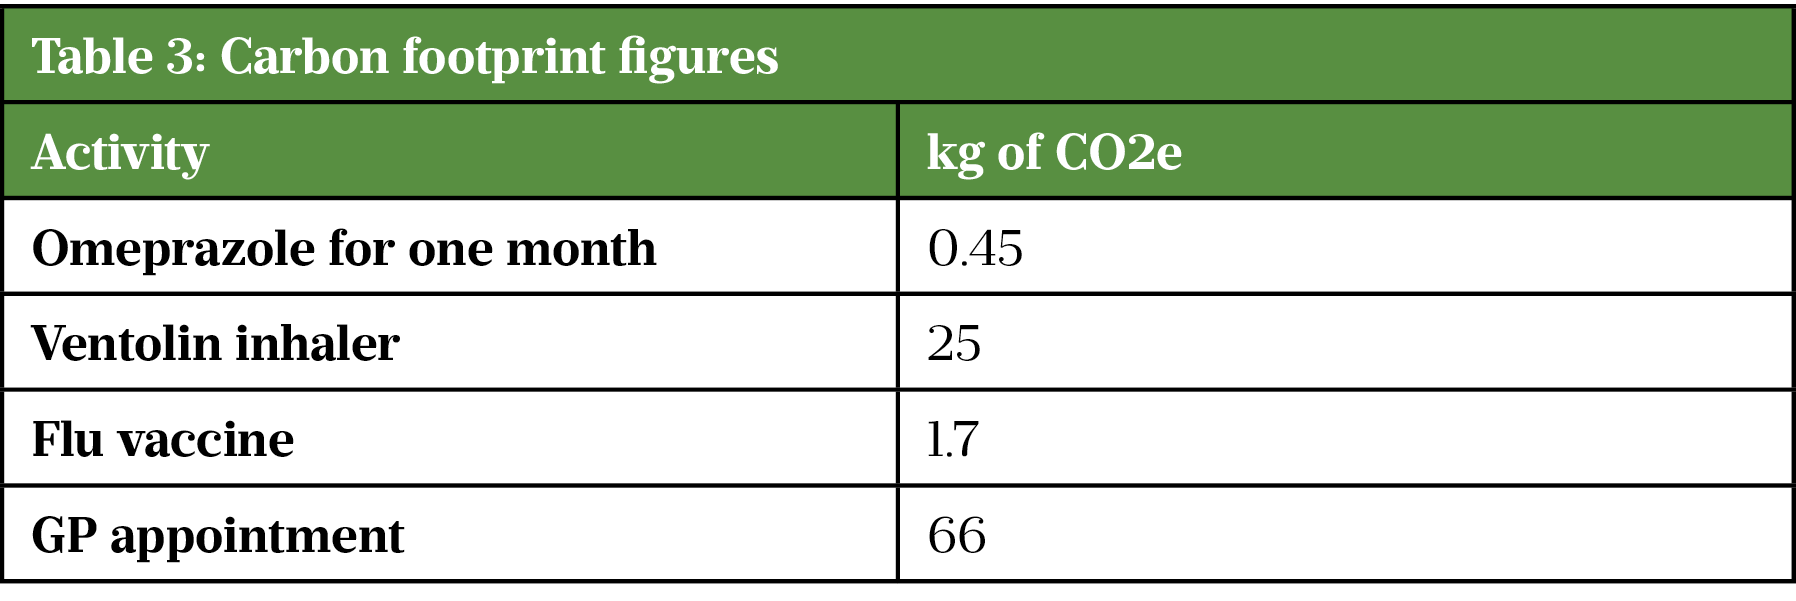 Table 3: Carbon footprint figures